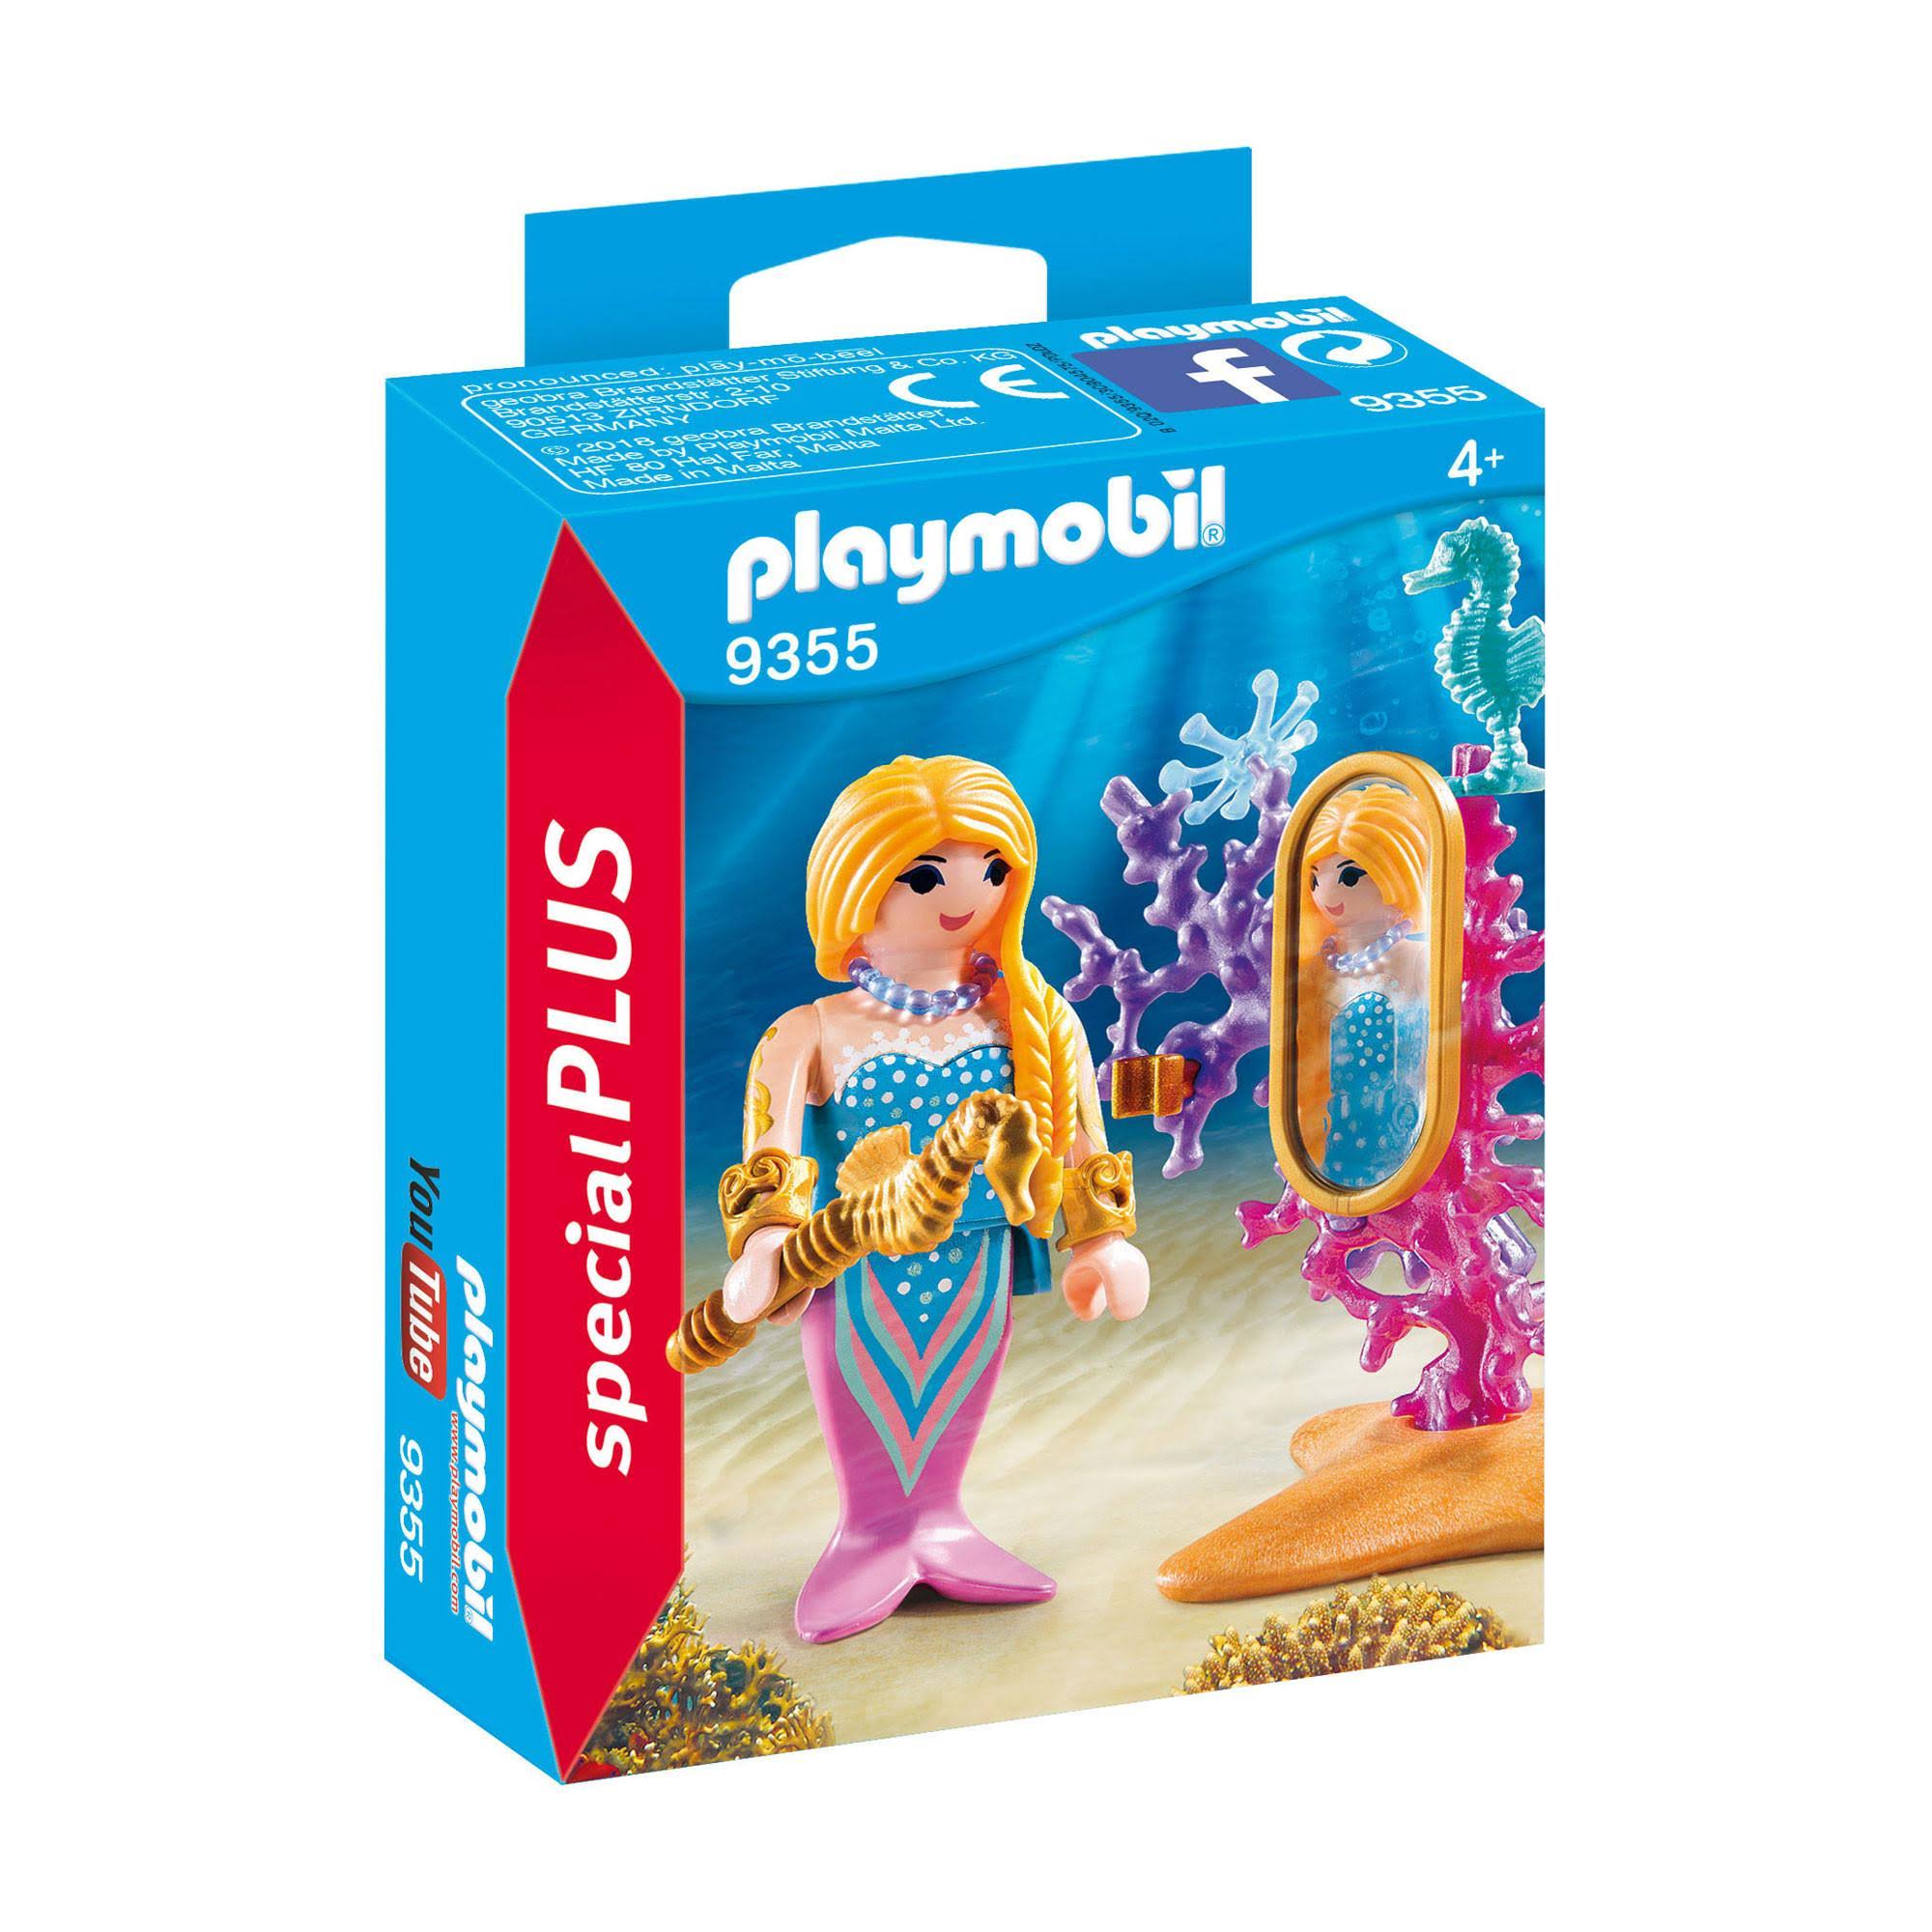 Playmobil 9355 Mermaid Playset